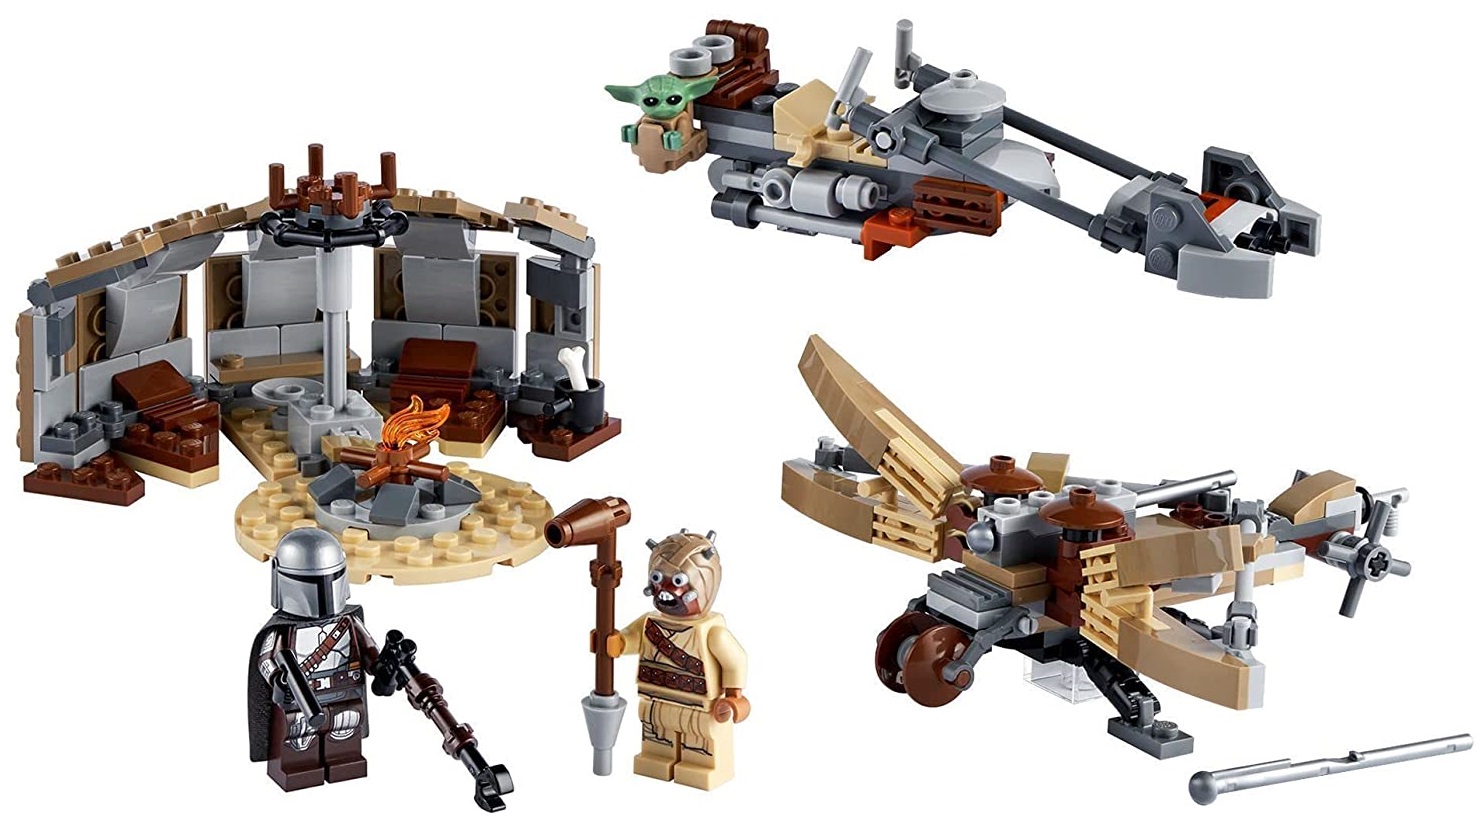 Lego Star Wars El Problema Mandaloriano En Tatooine  75299 